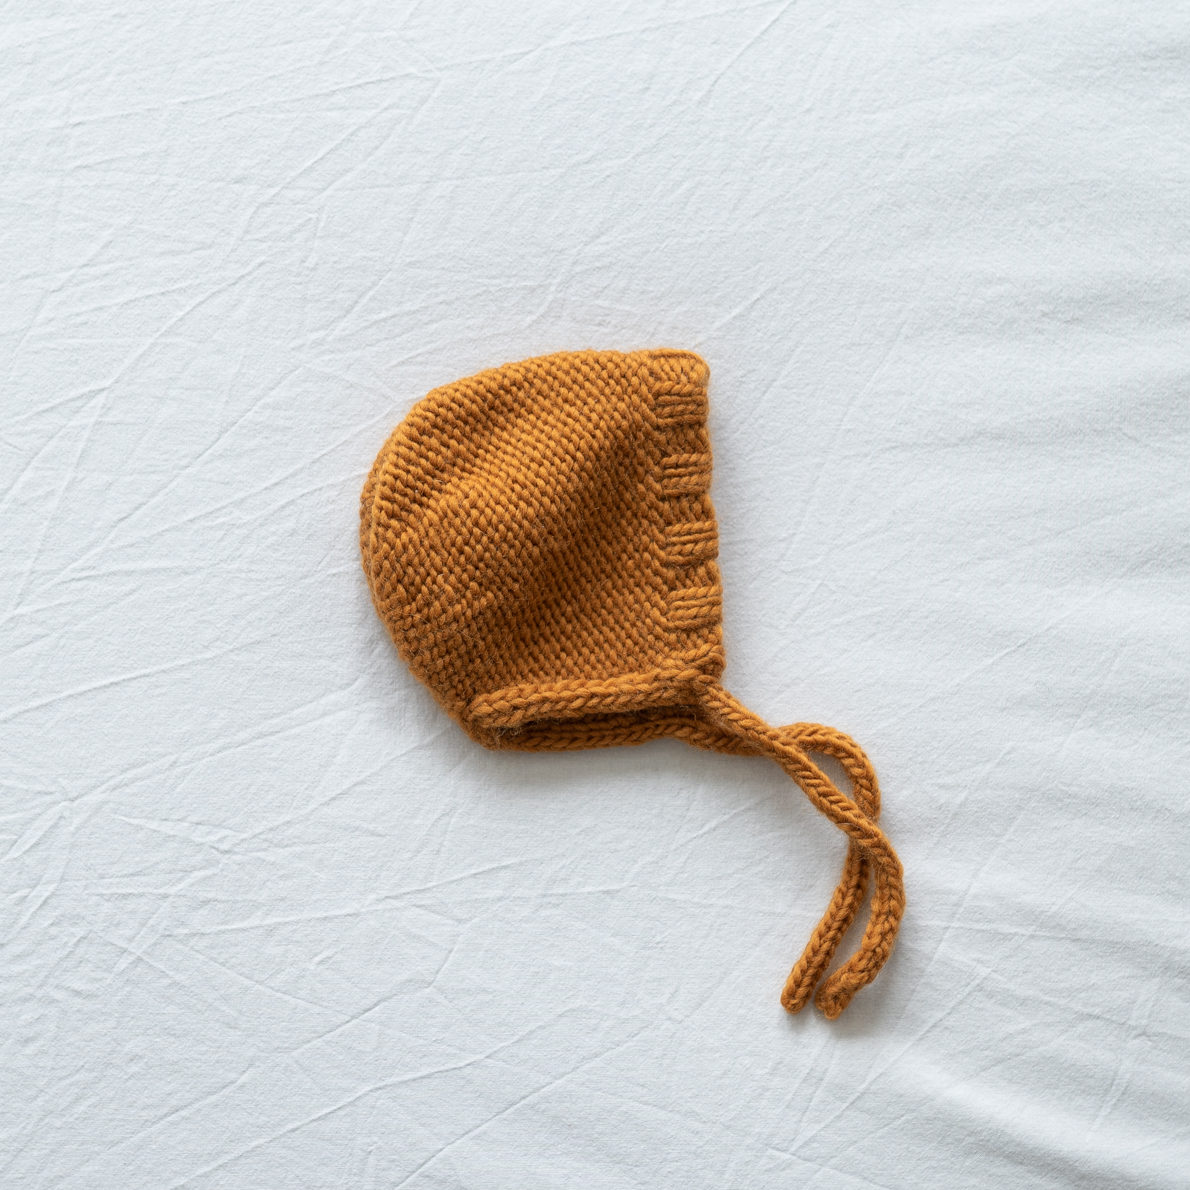  - Baby bonnet | Boho baby bonnet | Knitting kit - by HipKnitShop - 22/10/2020